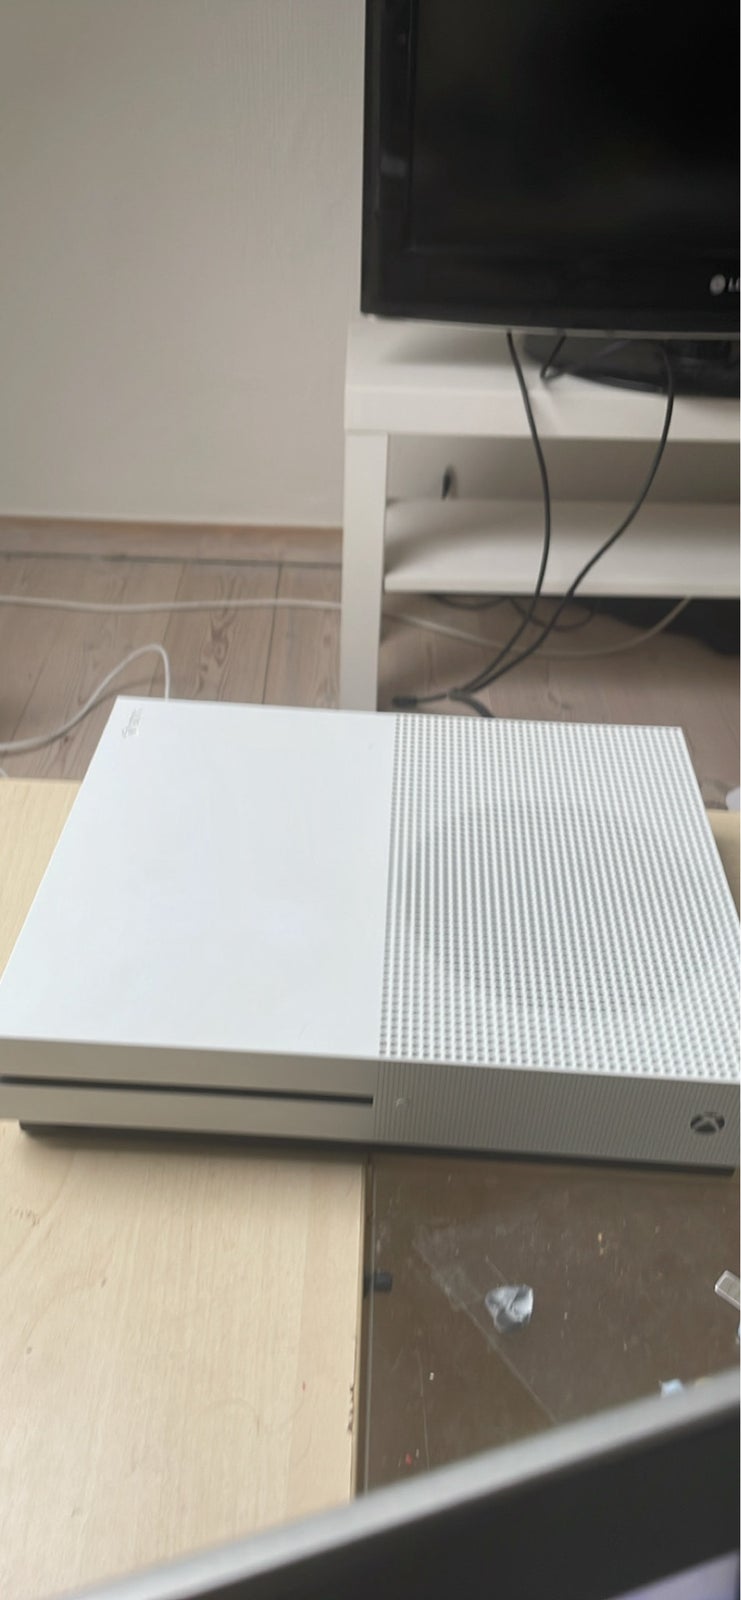 Xbox One S, 1000 gb disk, Perfekt